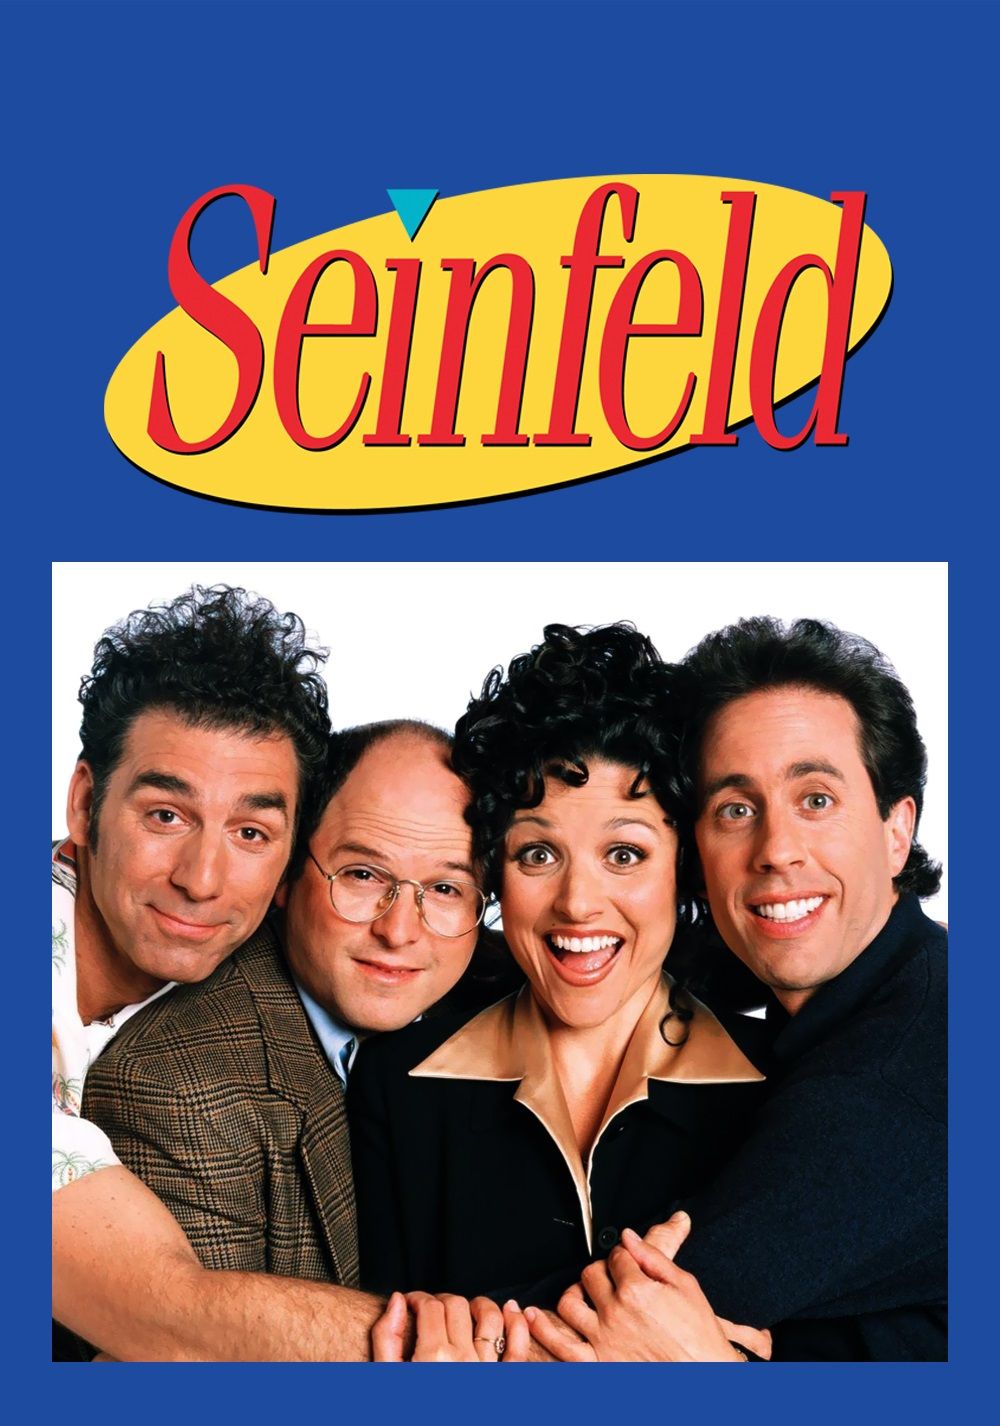 Seinfeld TV Show Poster